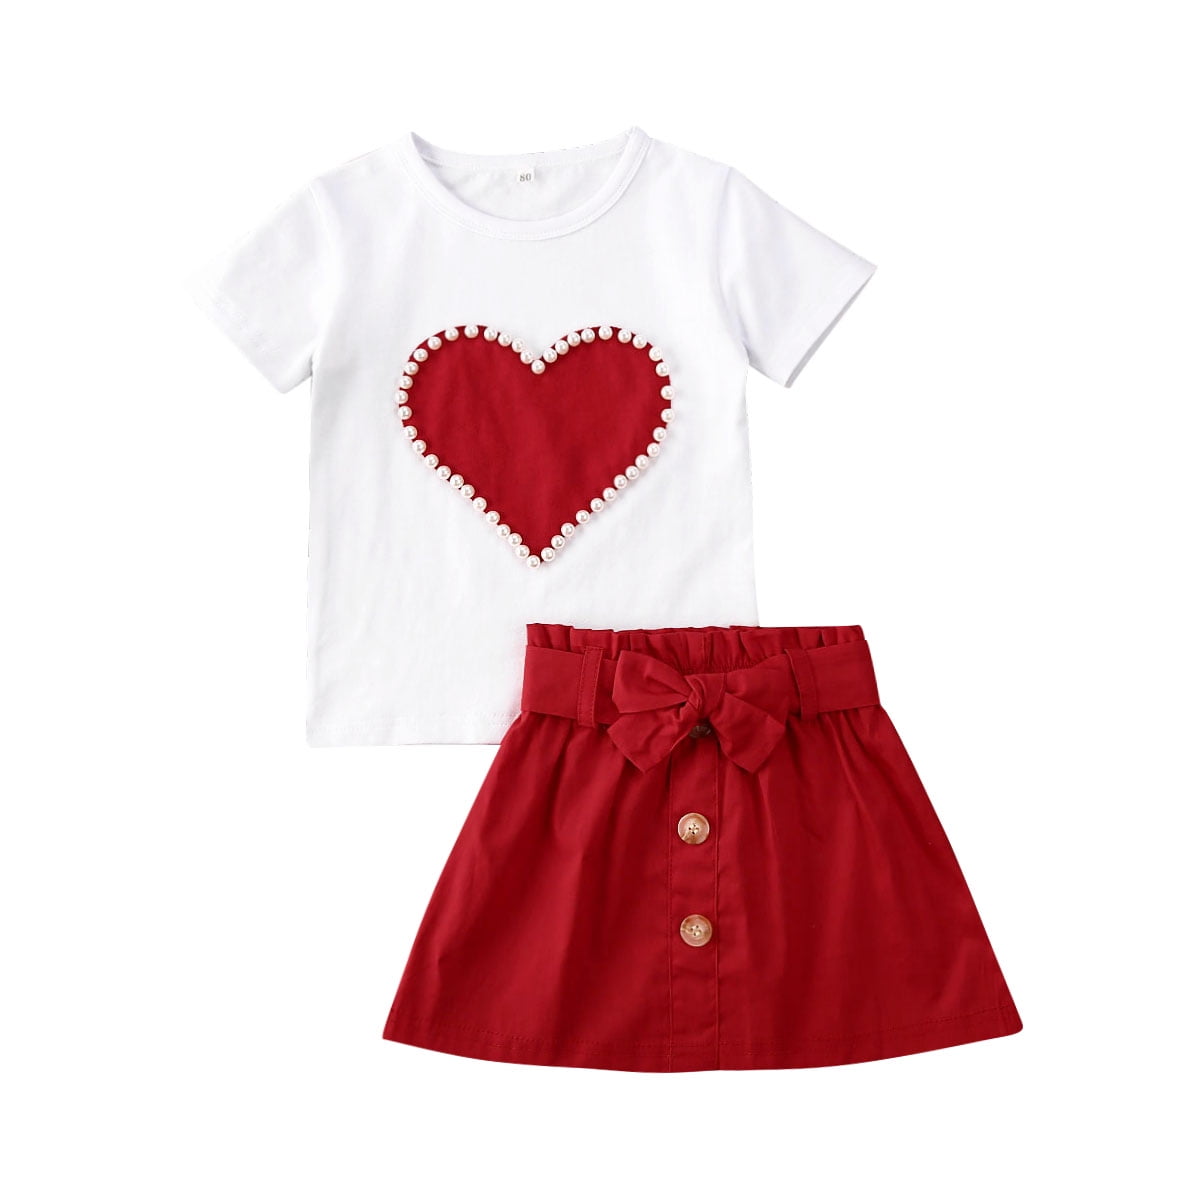 Puloru Toddler Kids Baby Girls Outfits Clothes Summer Heart T-shirt ...